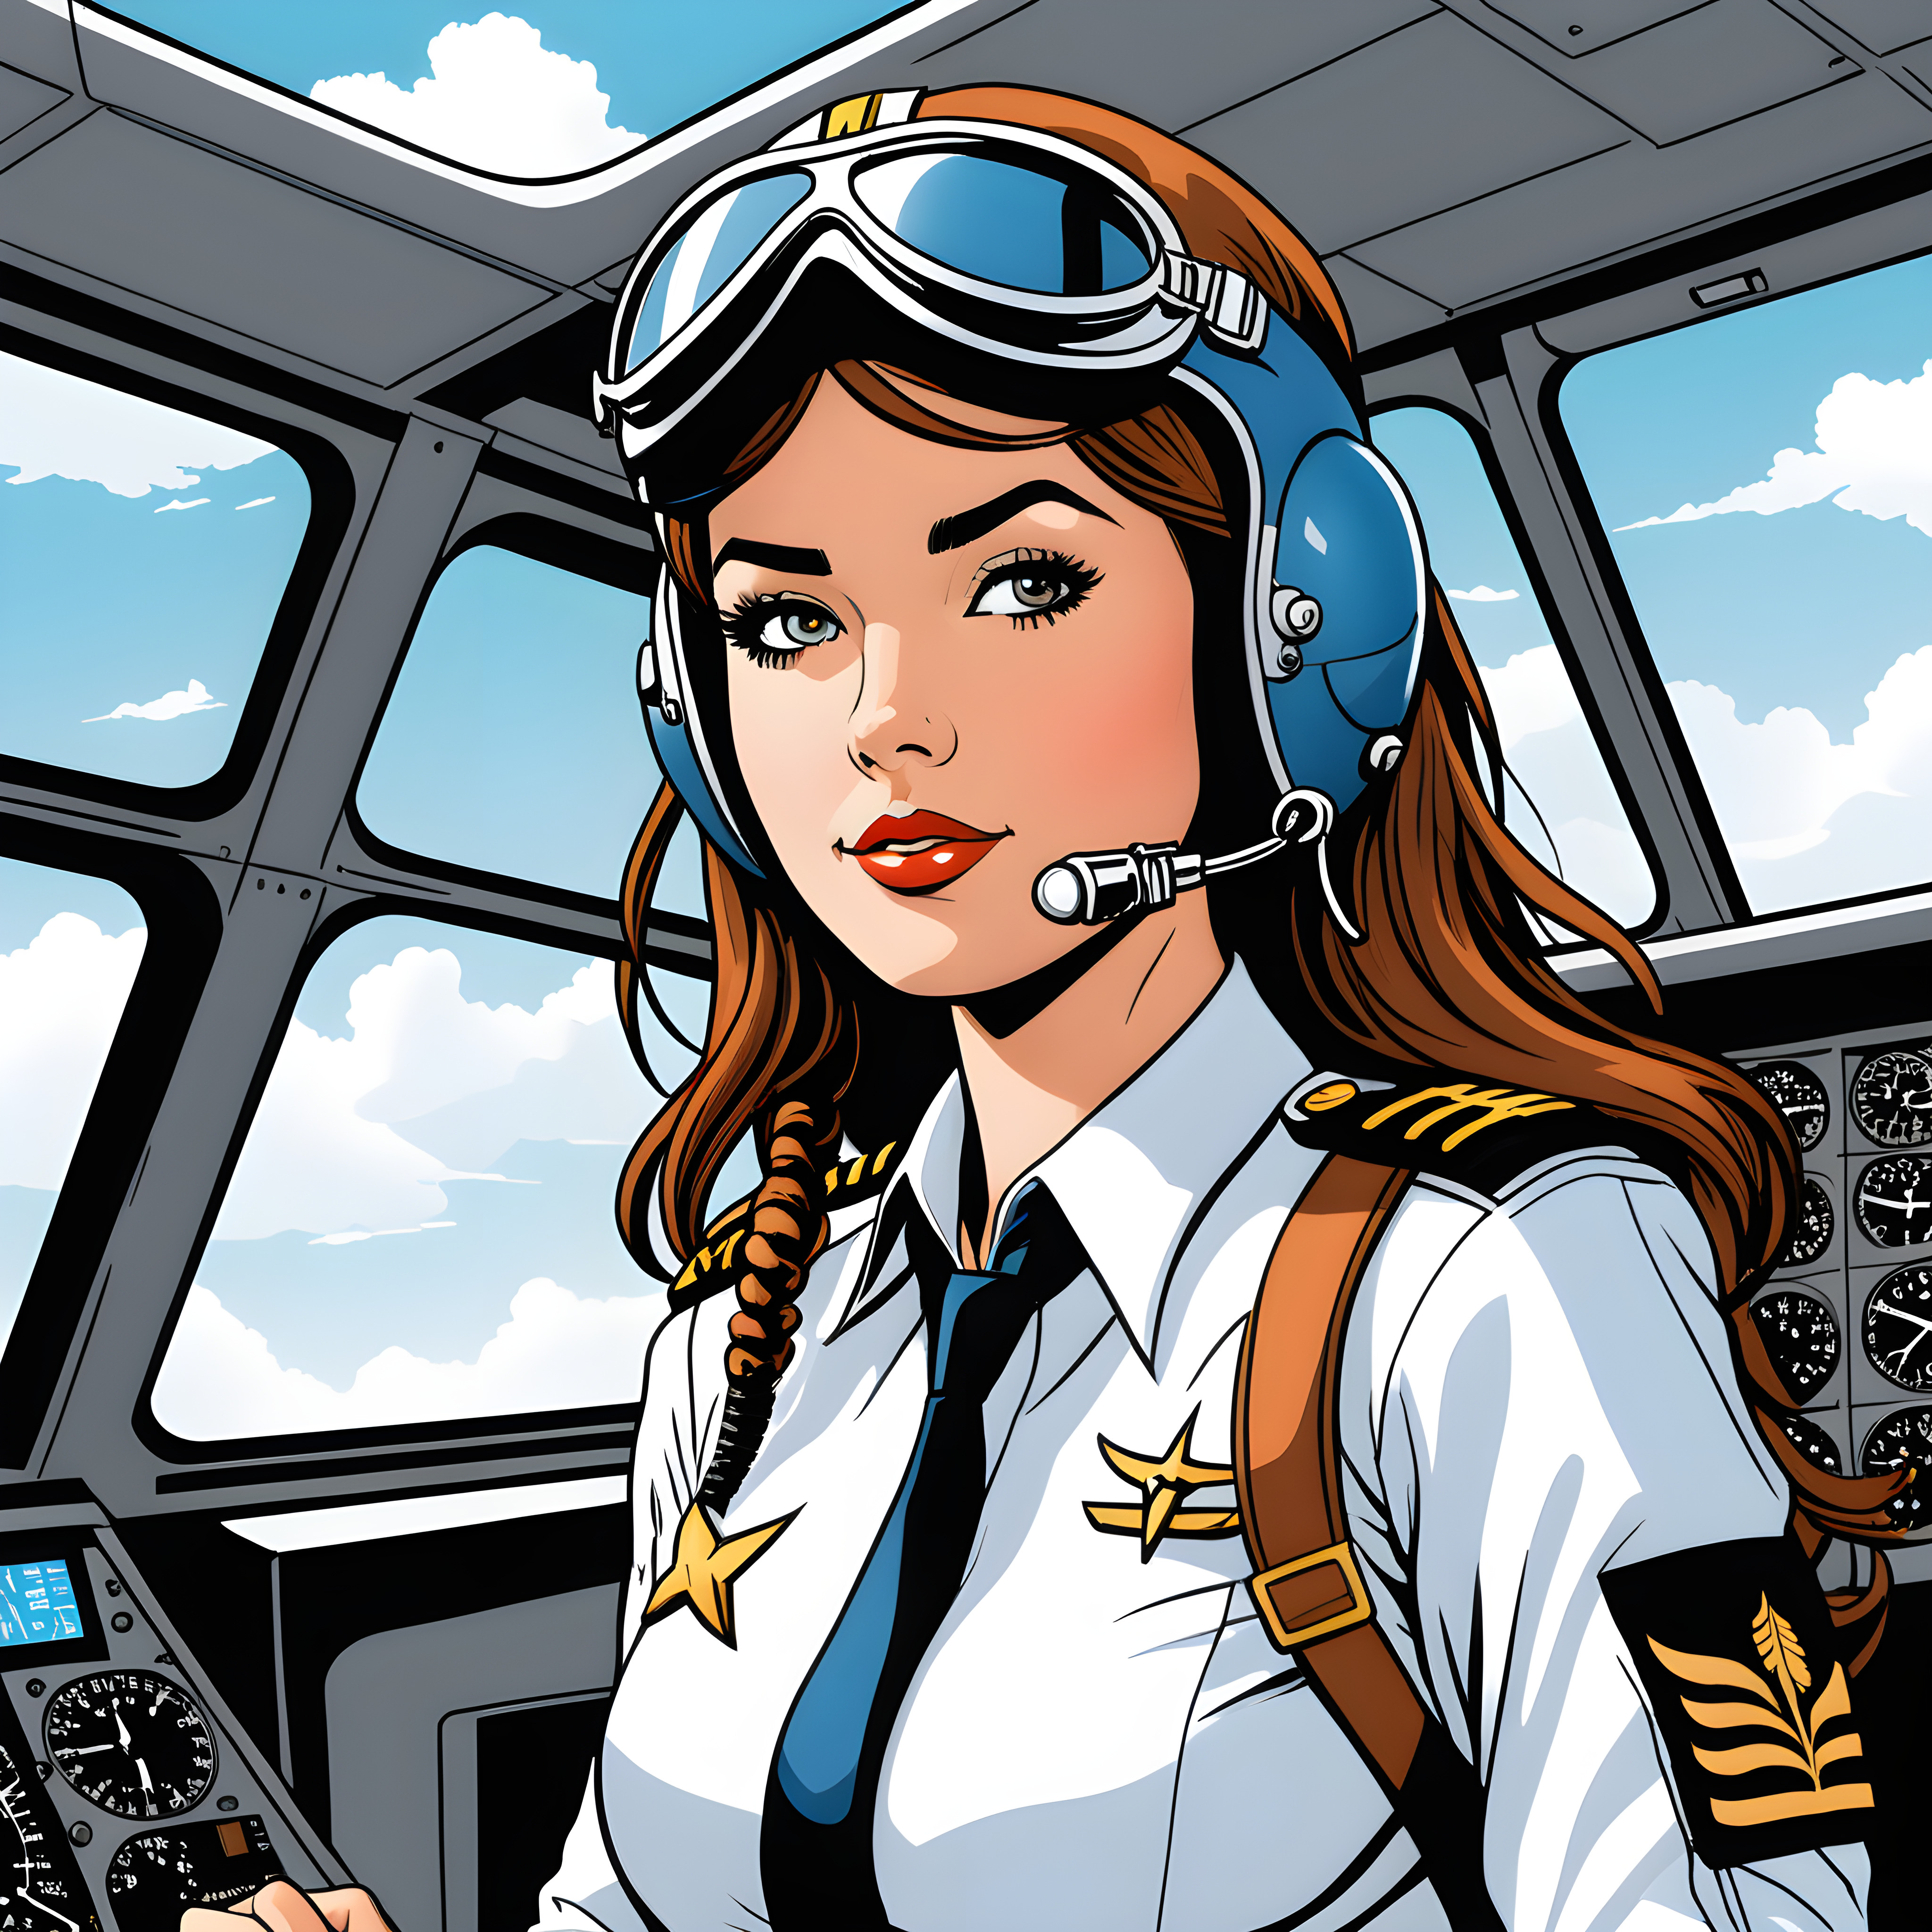 The girl pilot